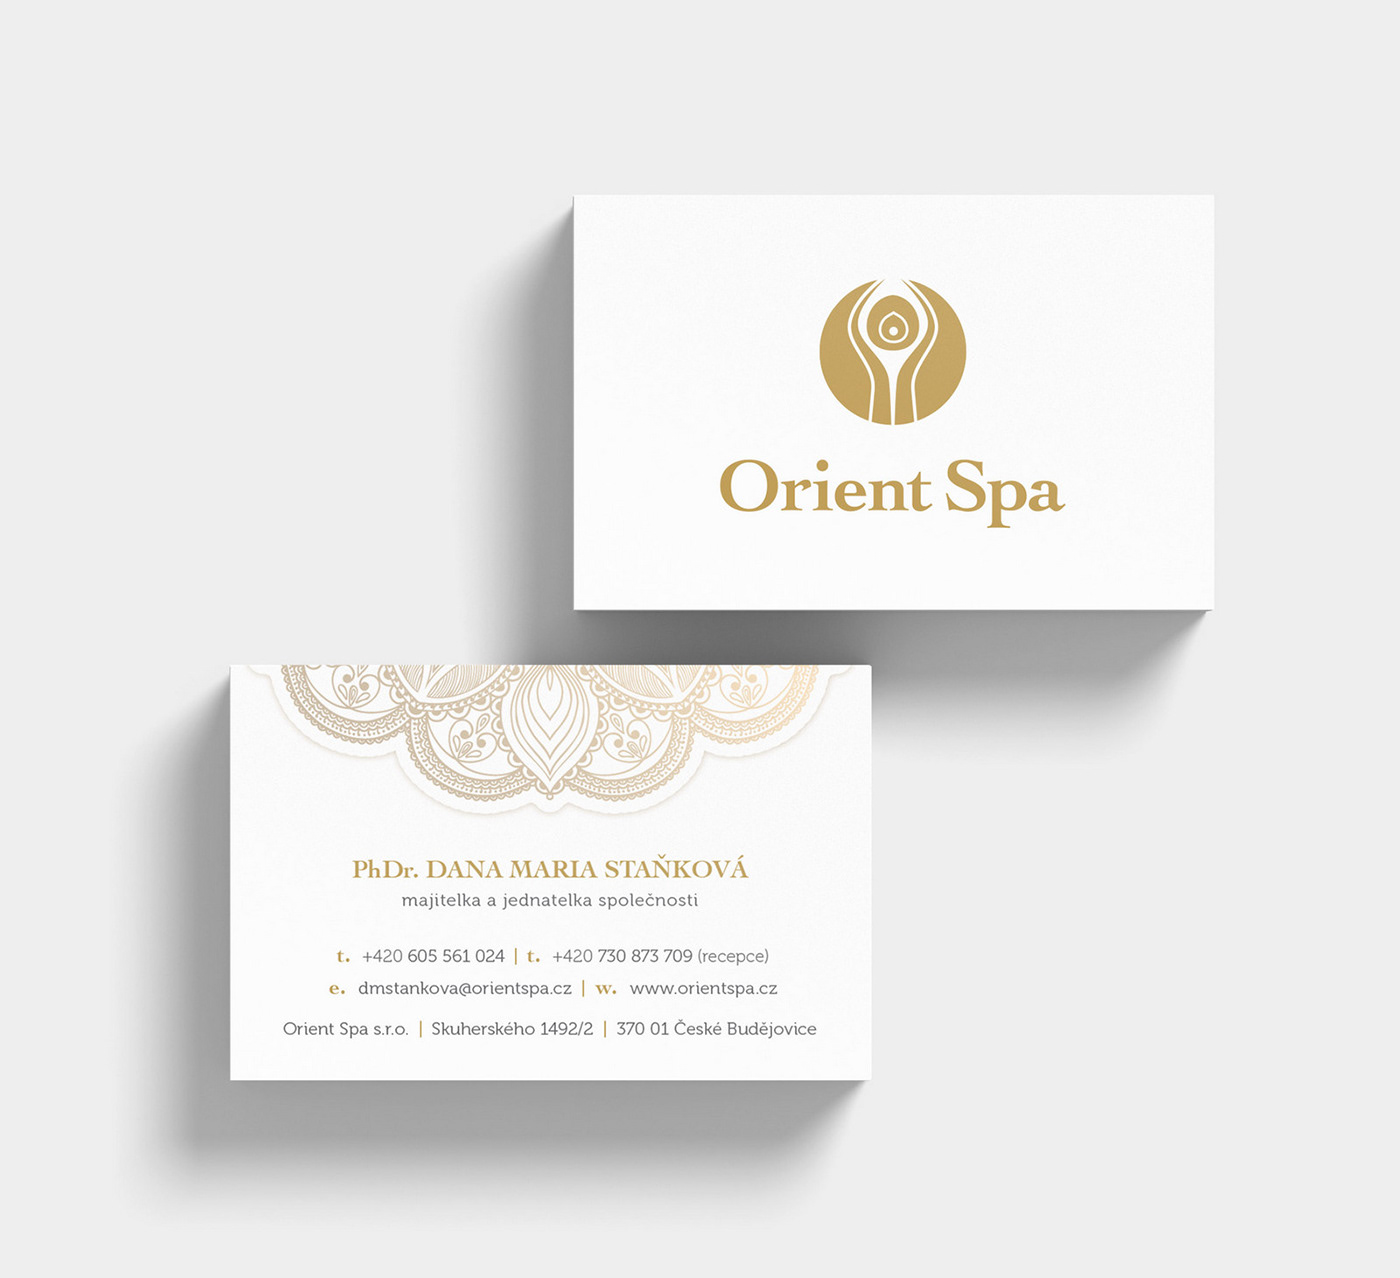 Spa massage Thai Orient texture car Corporate Identity